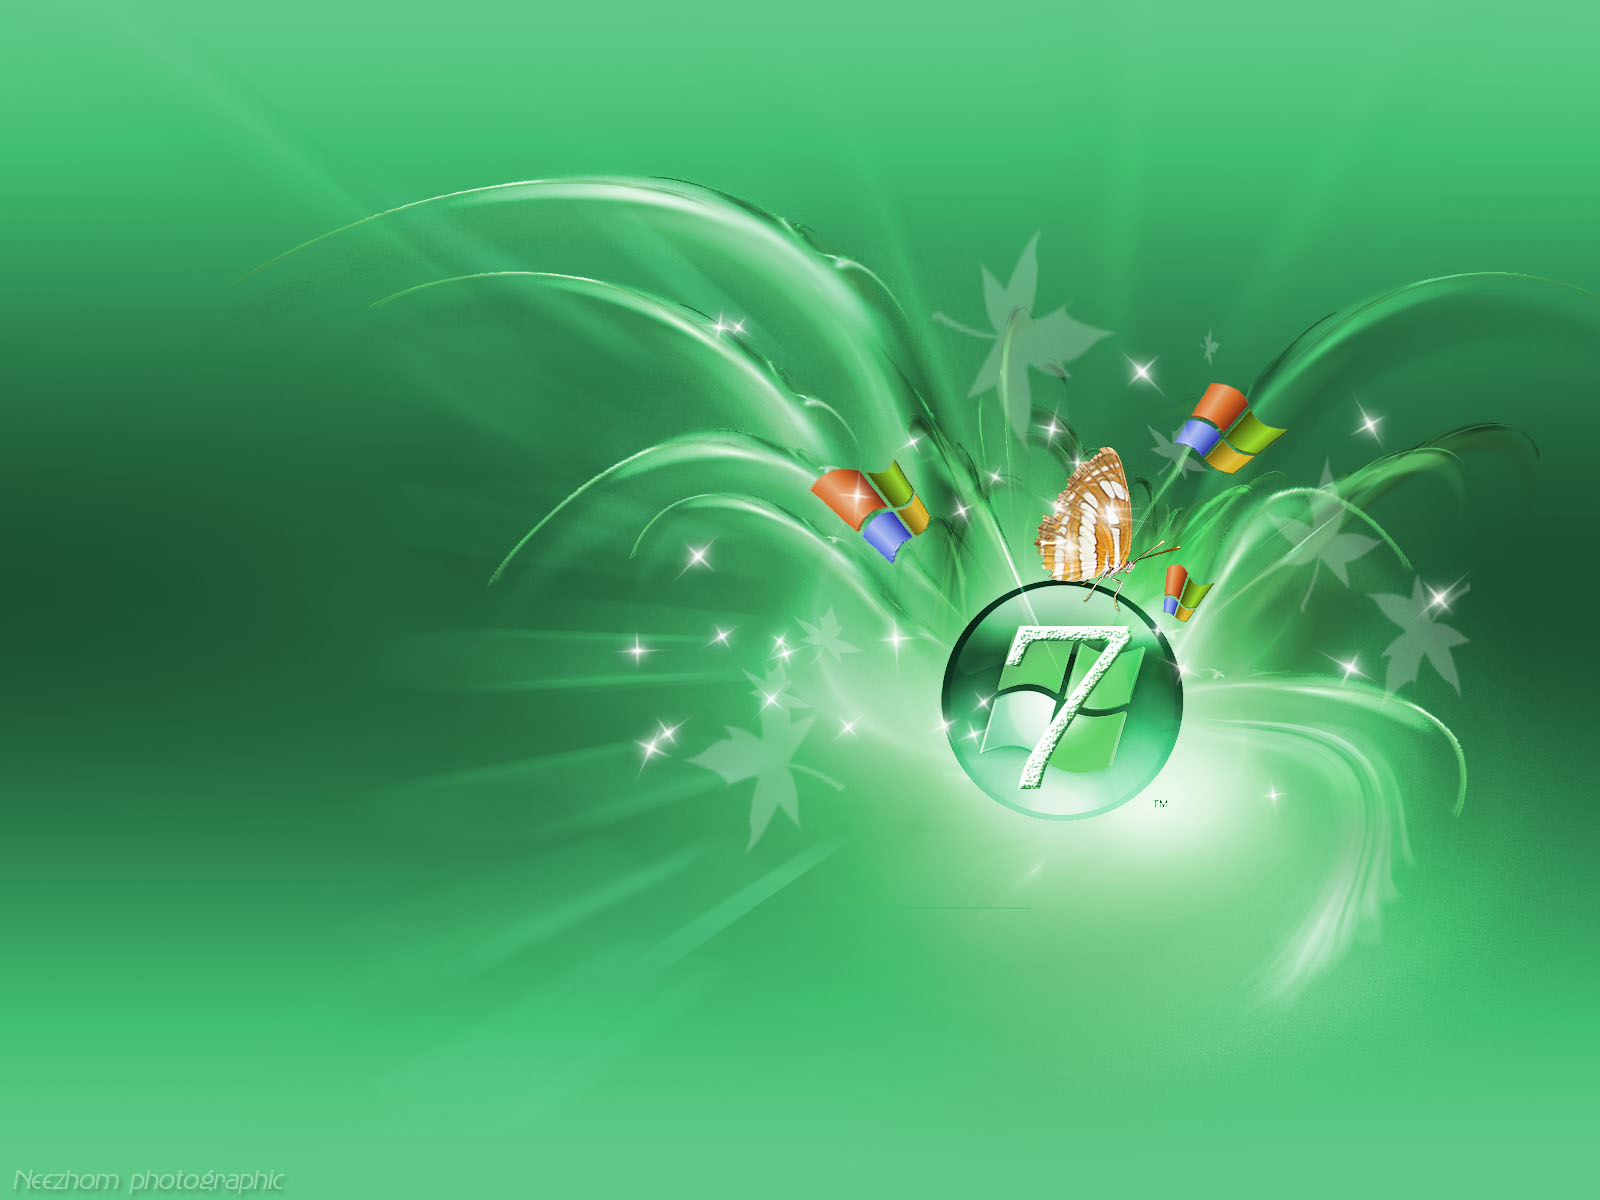 http://2.bp.blogspot.com/-6MThVr144X0/TvMHn8IgsJI/AAAAAAAAAQQ/TIx5v3mmtVc/s1600/Cover+Windows++7+3D+green+wallpaper.jpg